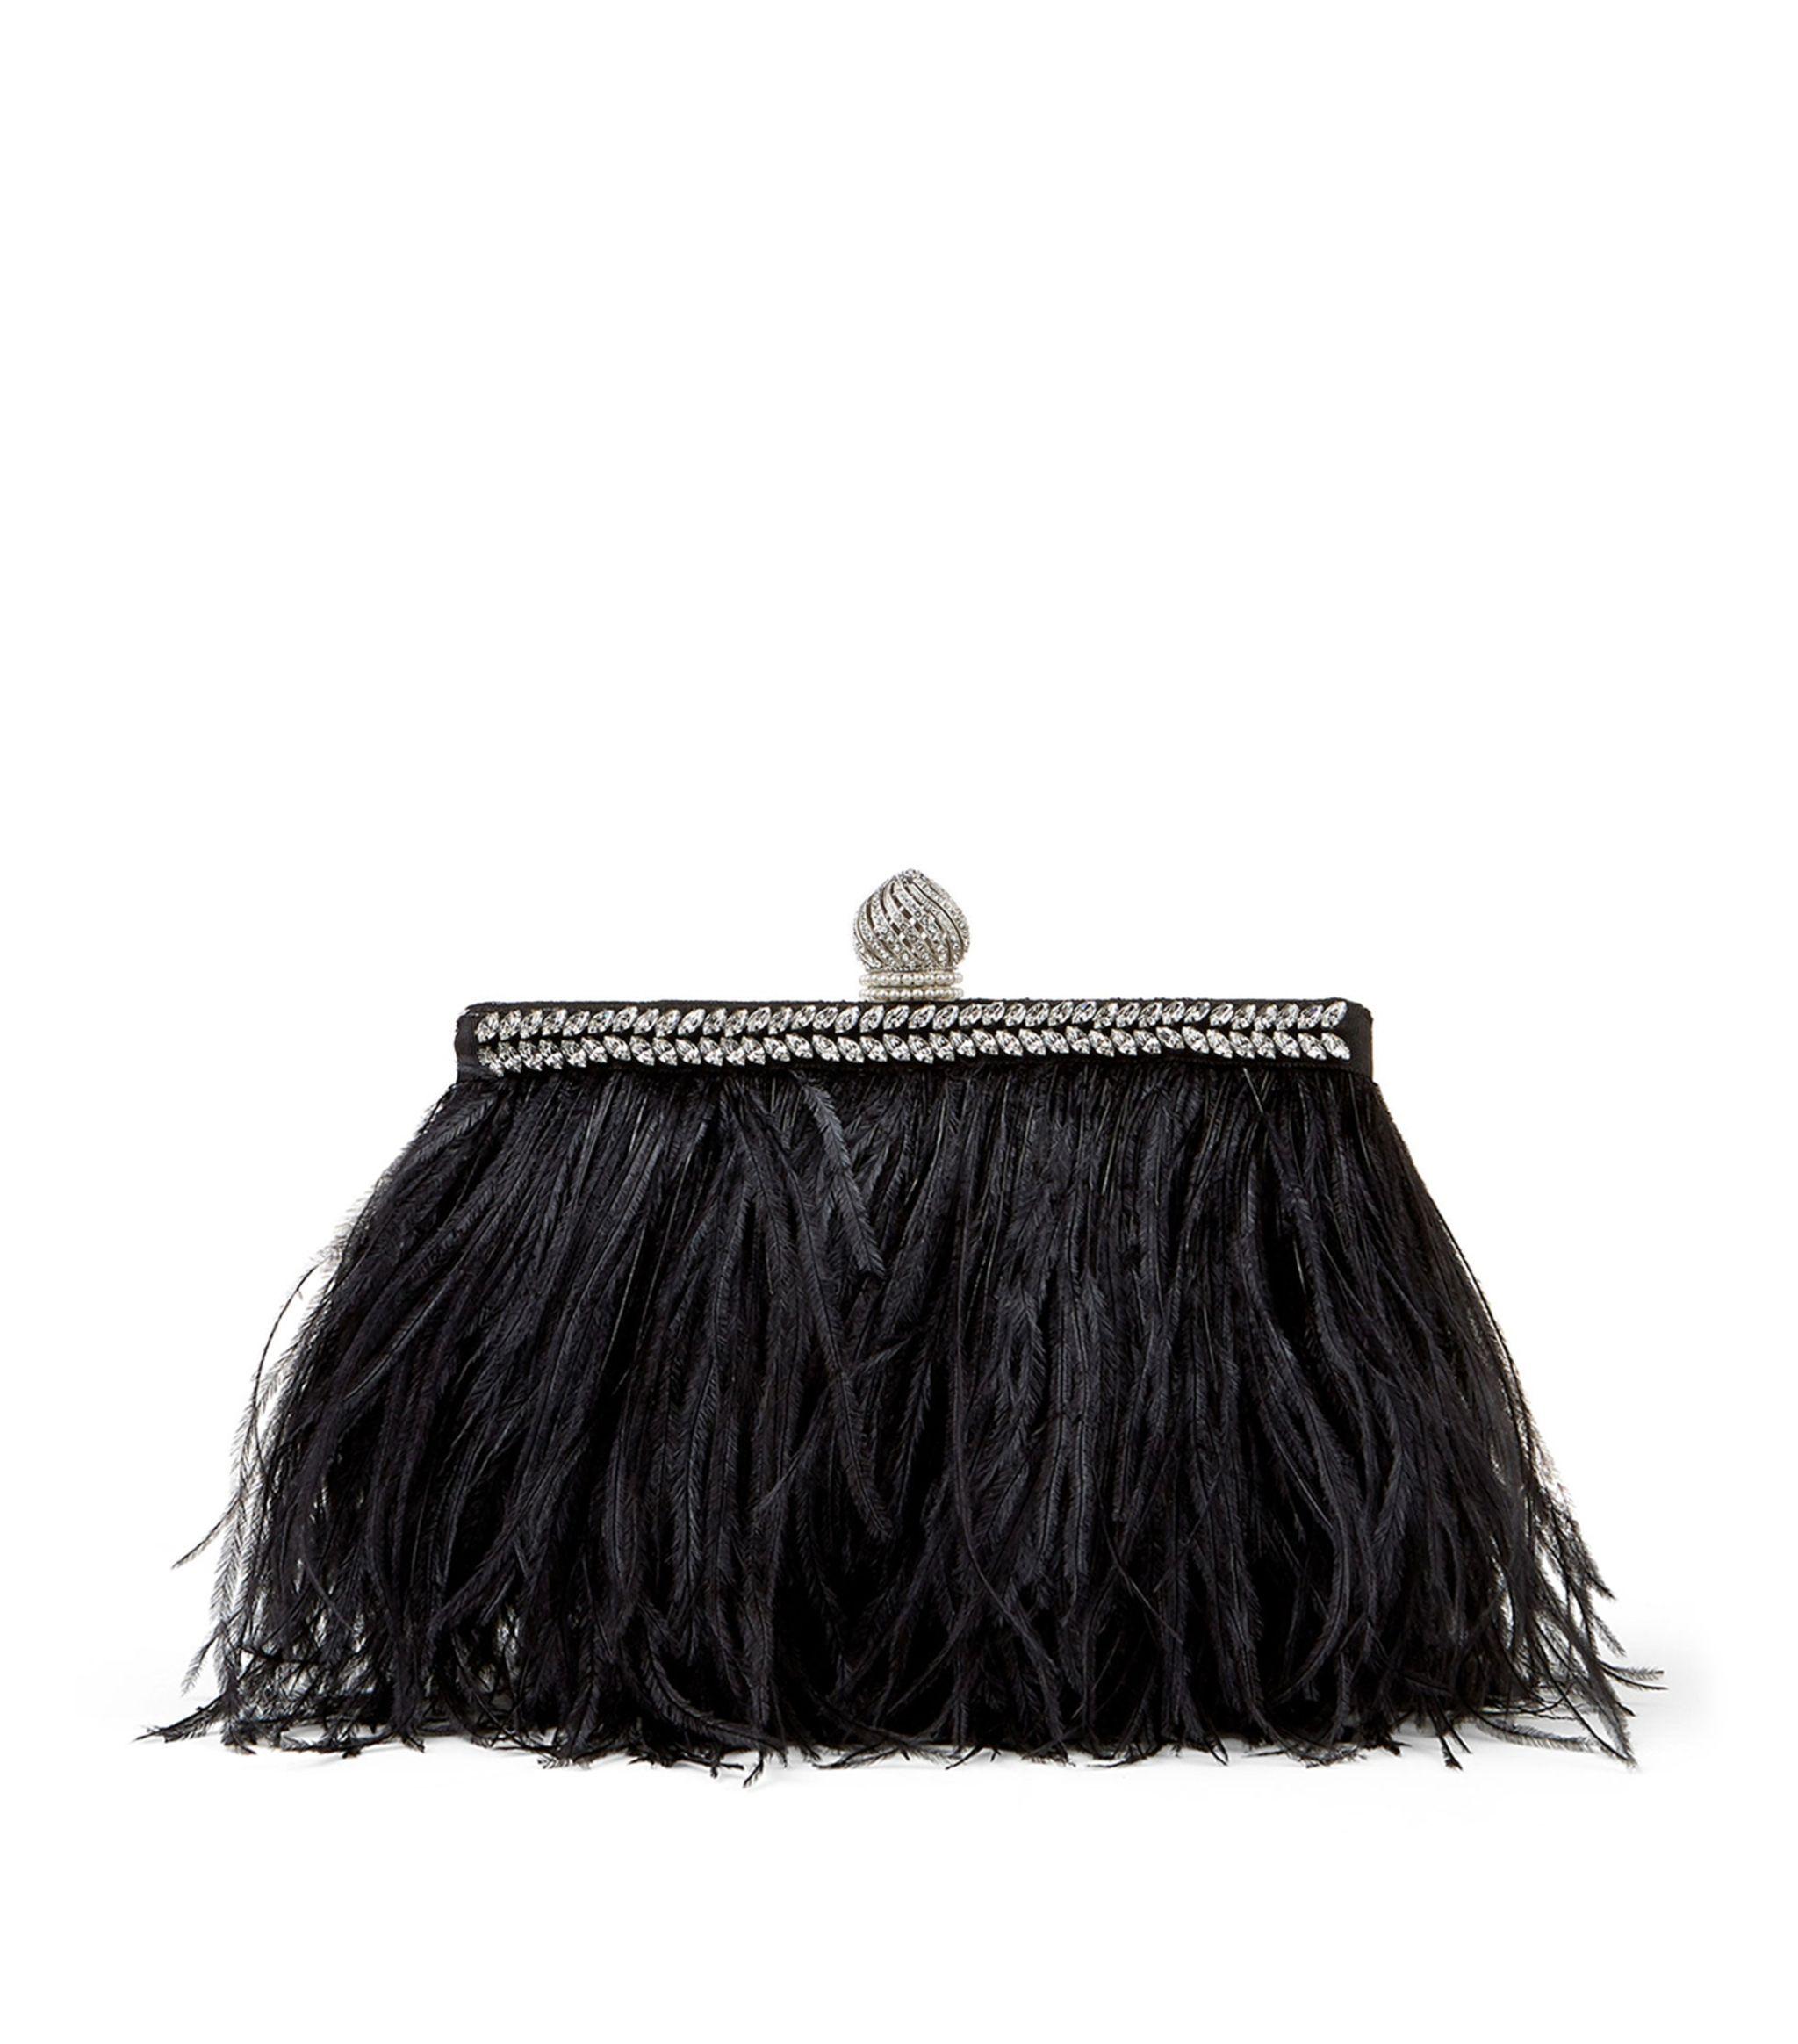 Jimmy Choo Satin Ostrich Feather Celeste Clutch Bag in Black - Lyst